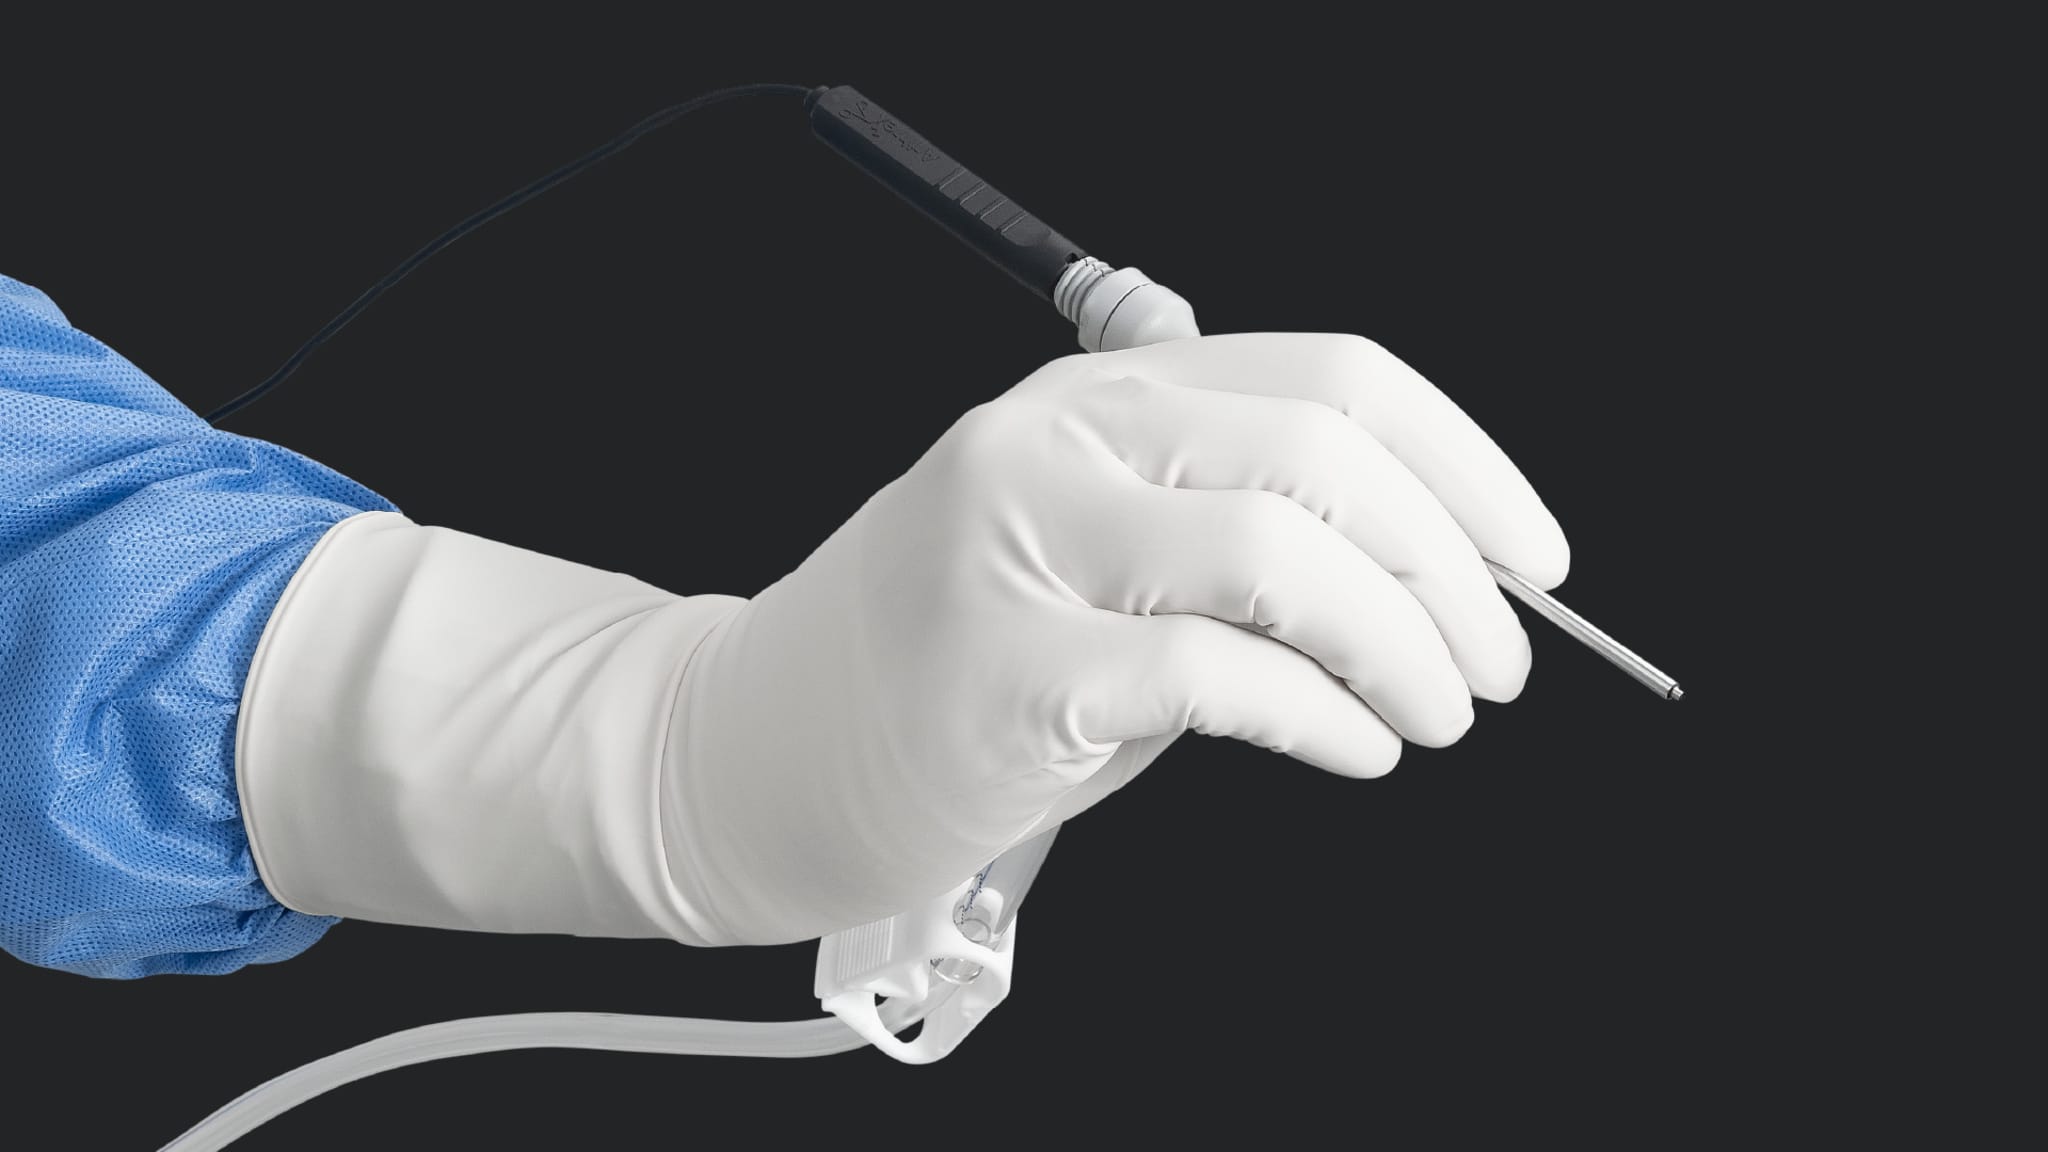 Diagnostic Shoulder Scope Using the NanoNeedle Scope System